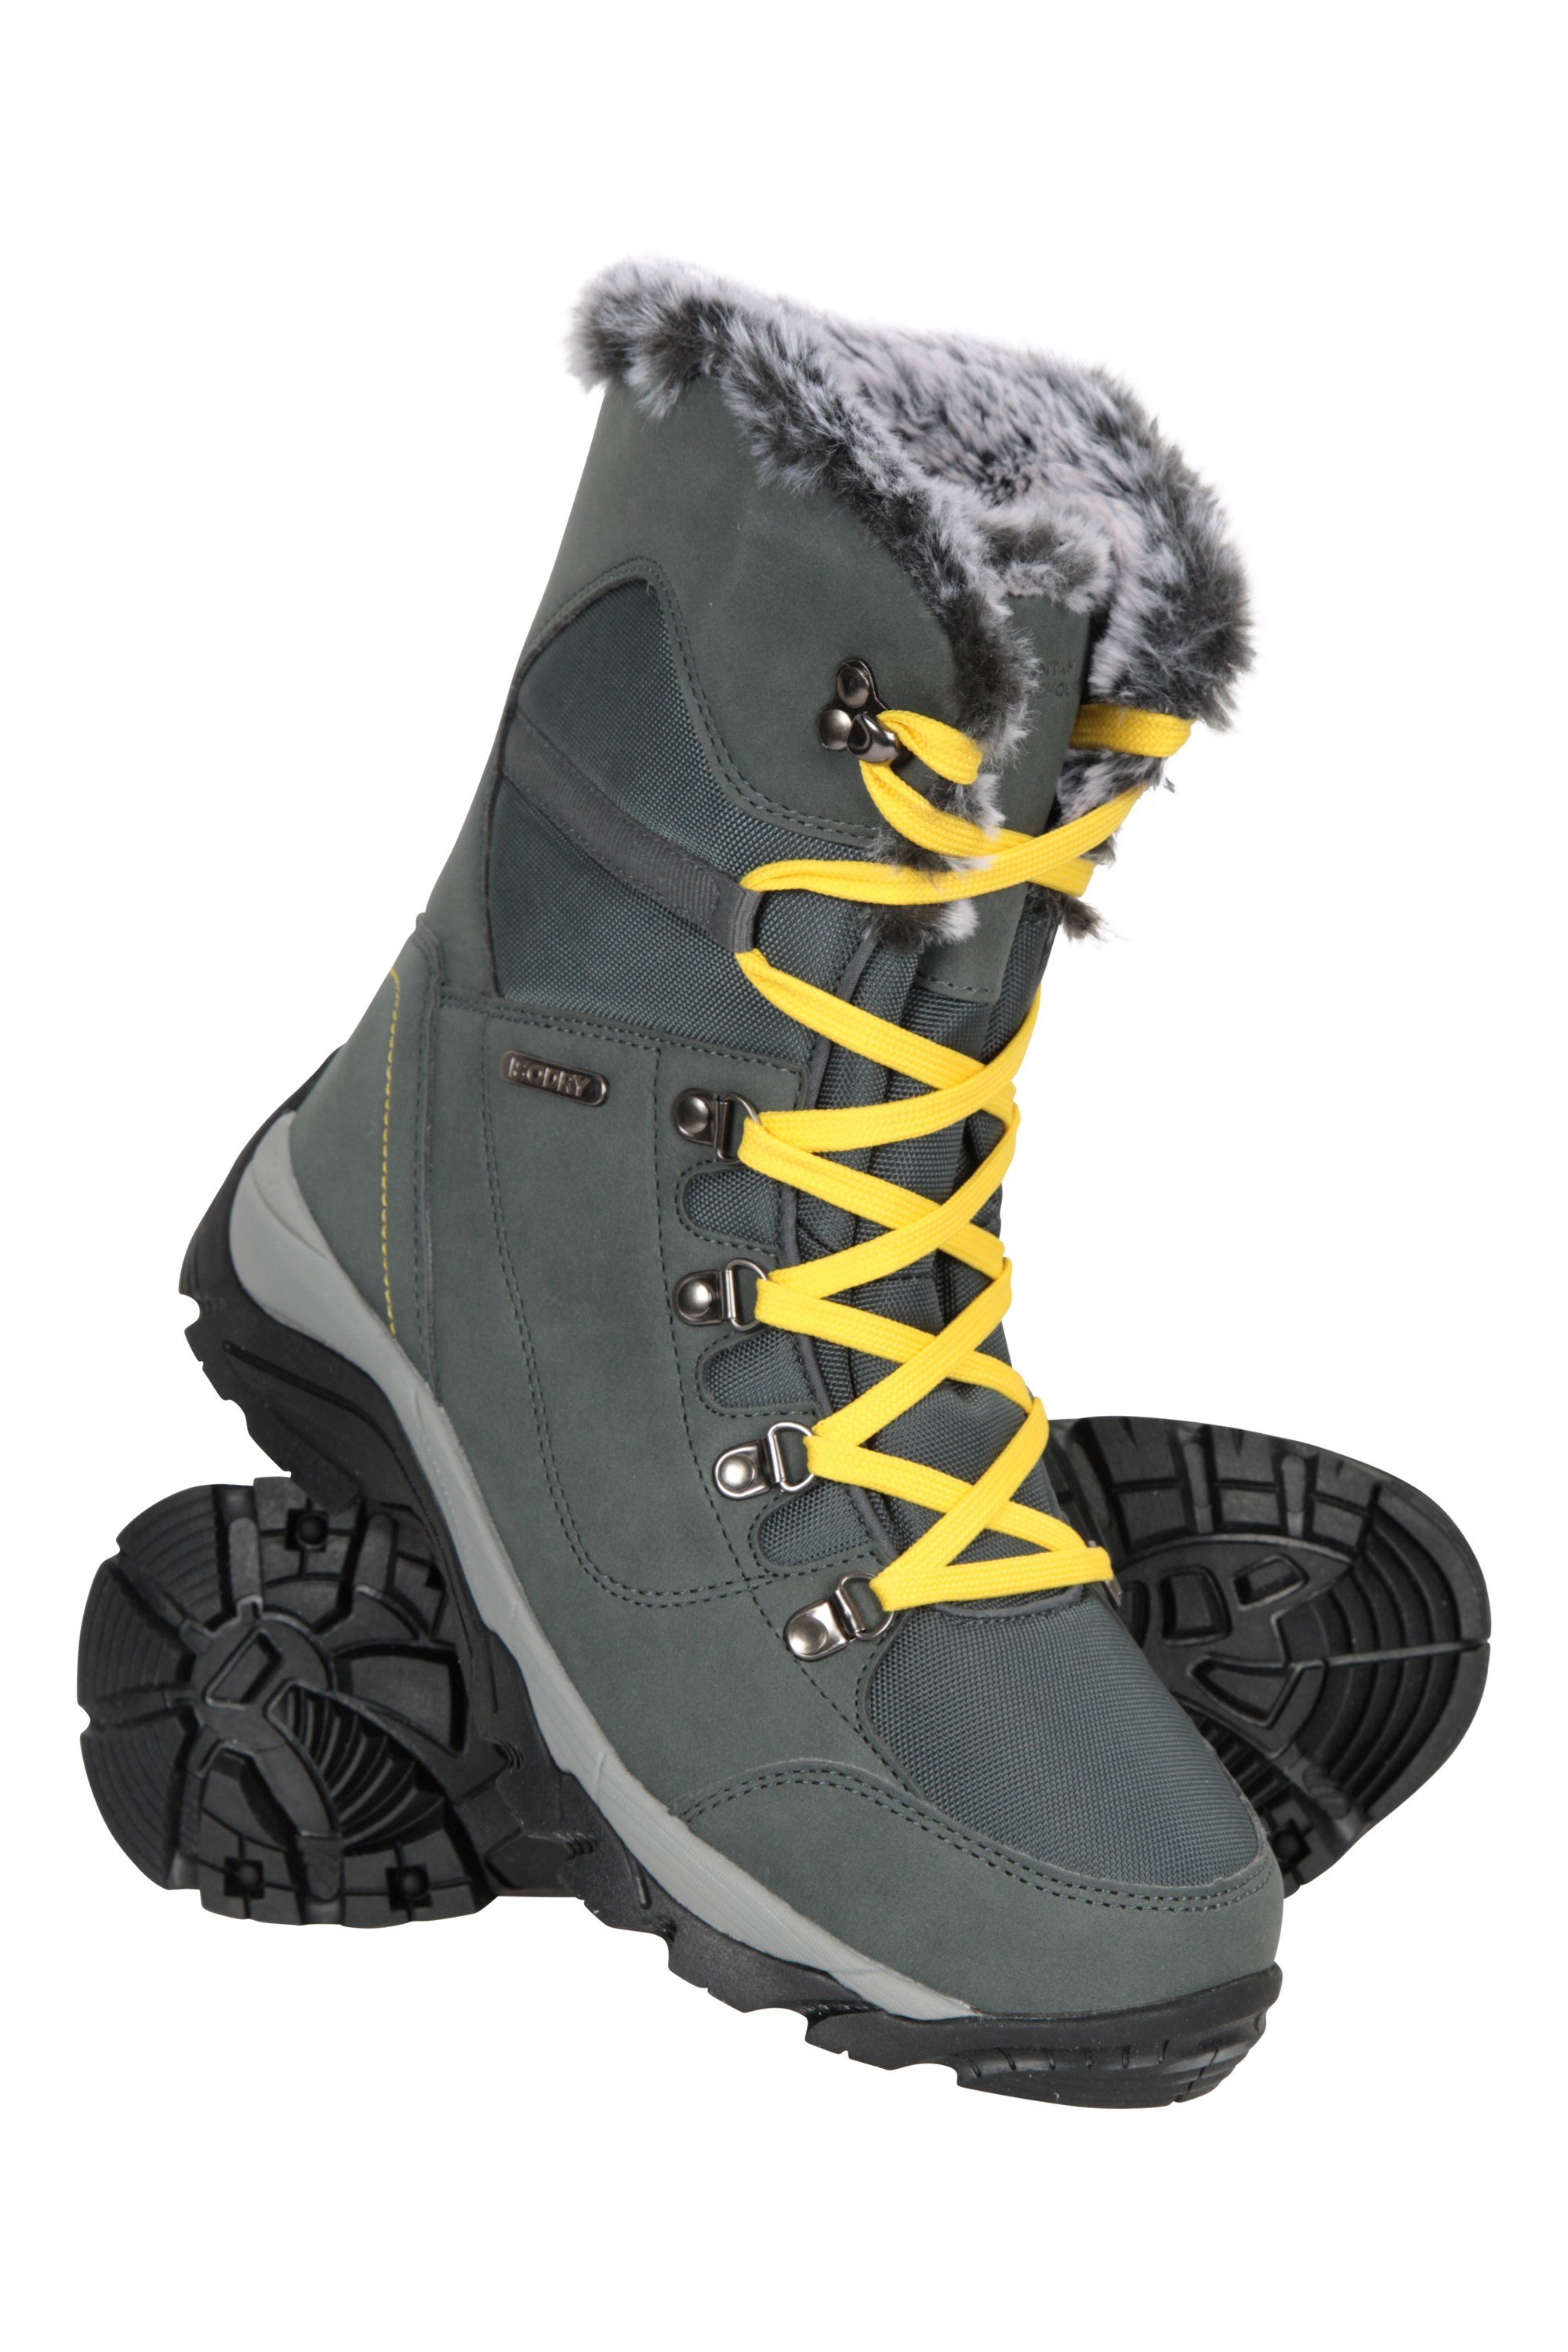 Banff Womens Waterproof Snow Boots - Dark Grey